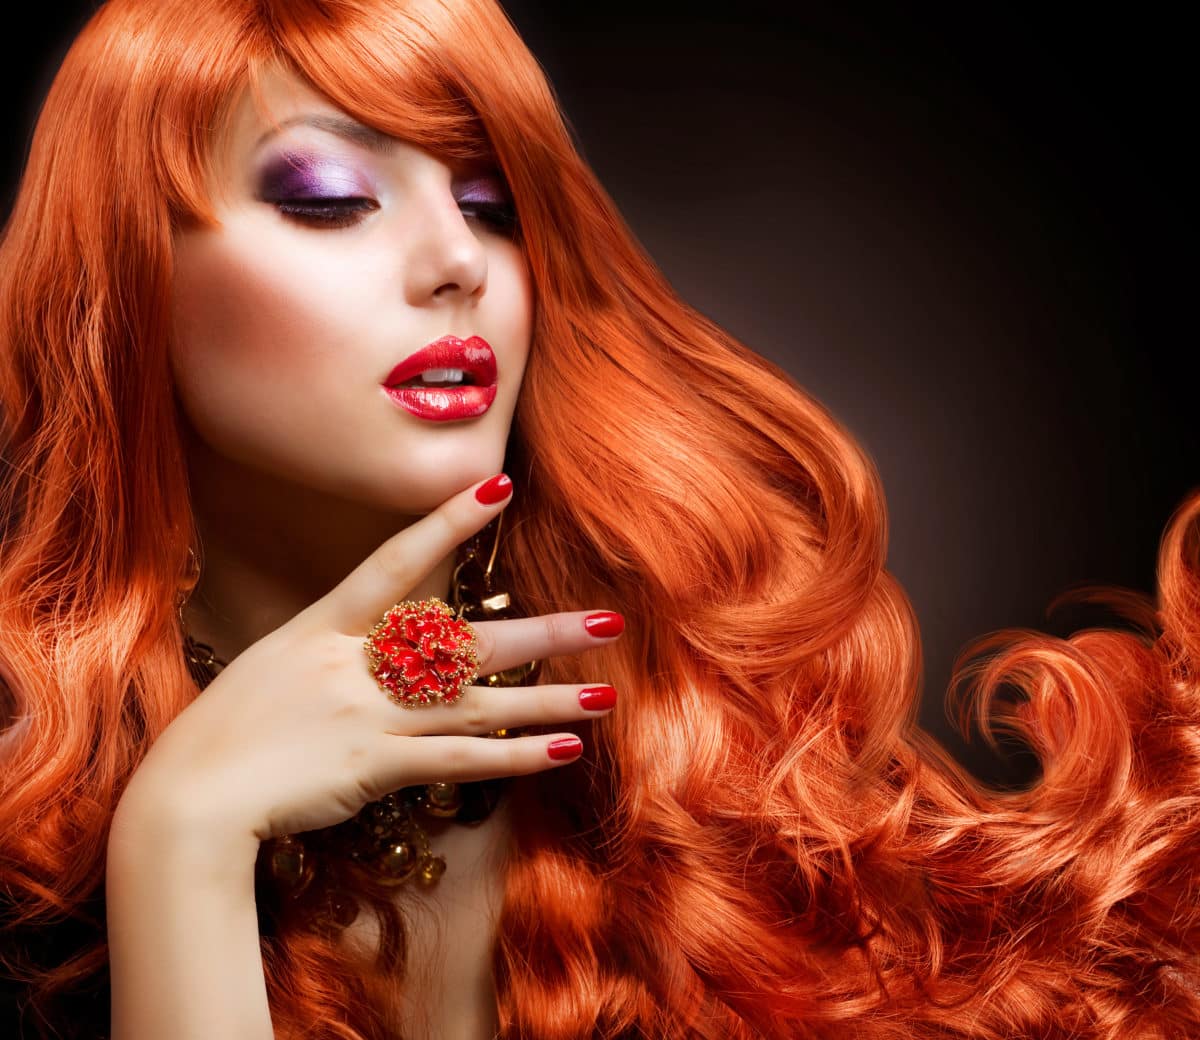 Red Hair. Fashion Girl Portrait